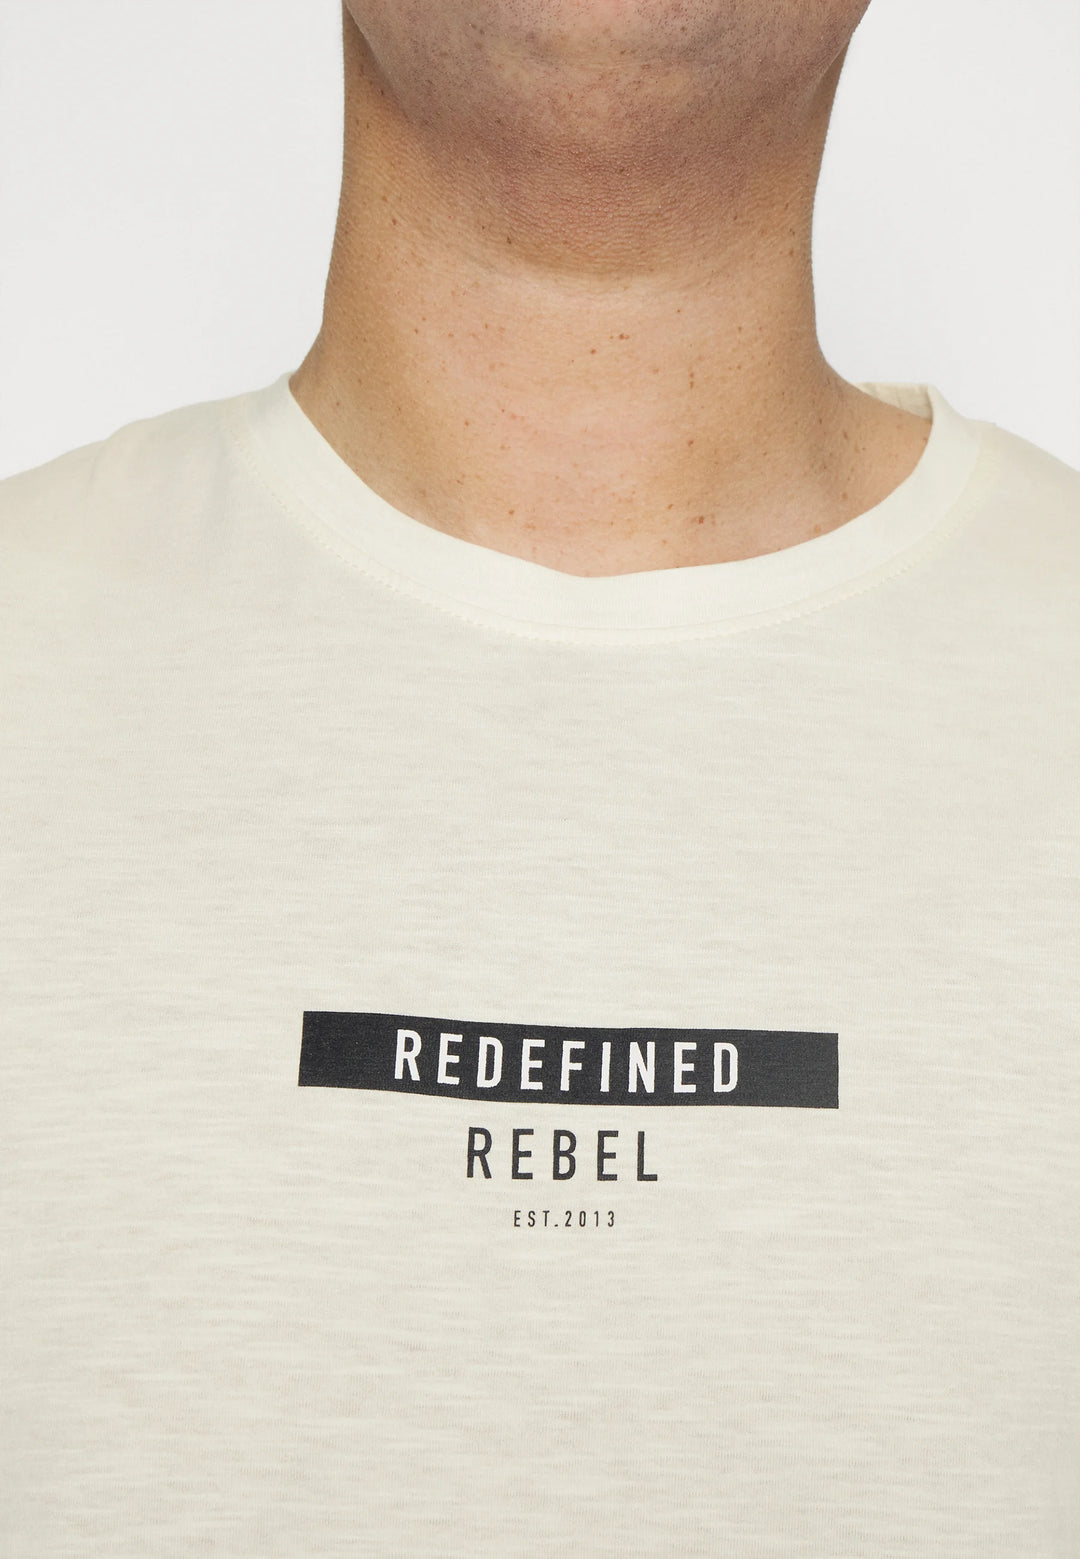 Redefined rebel guti t-shirt in cream